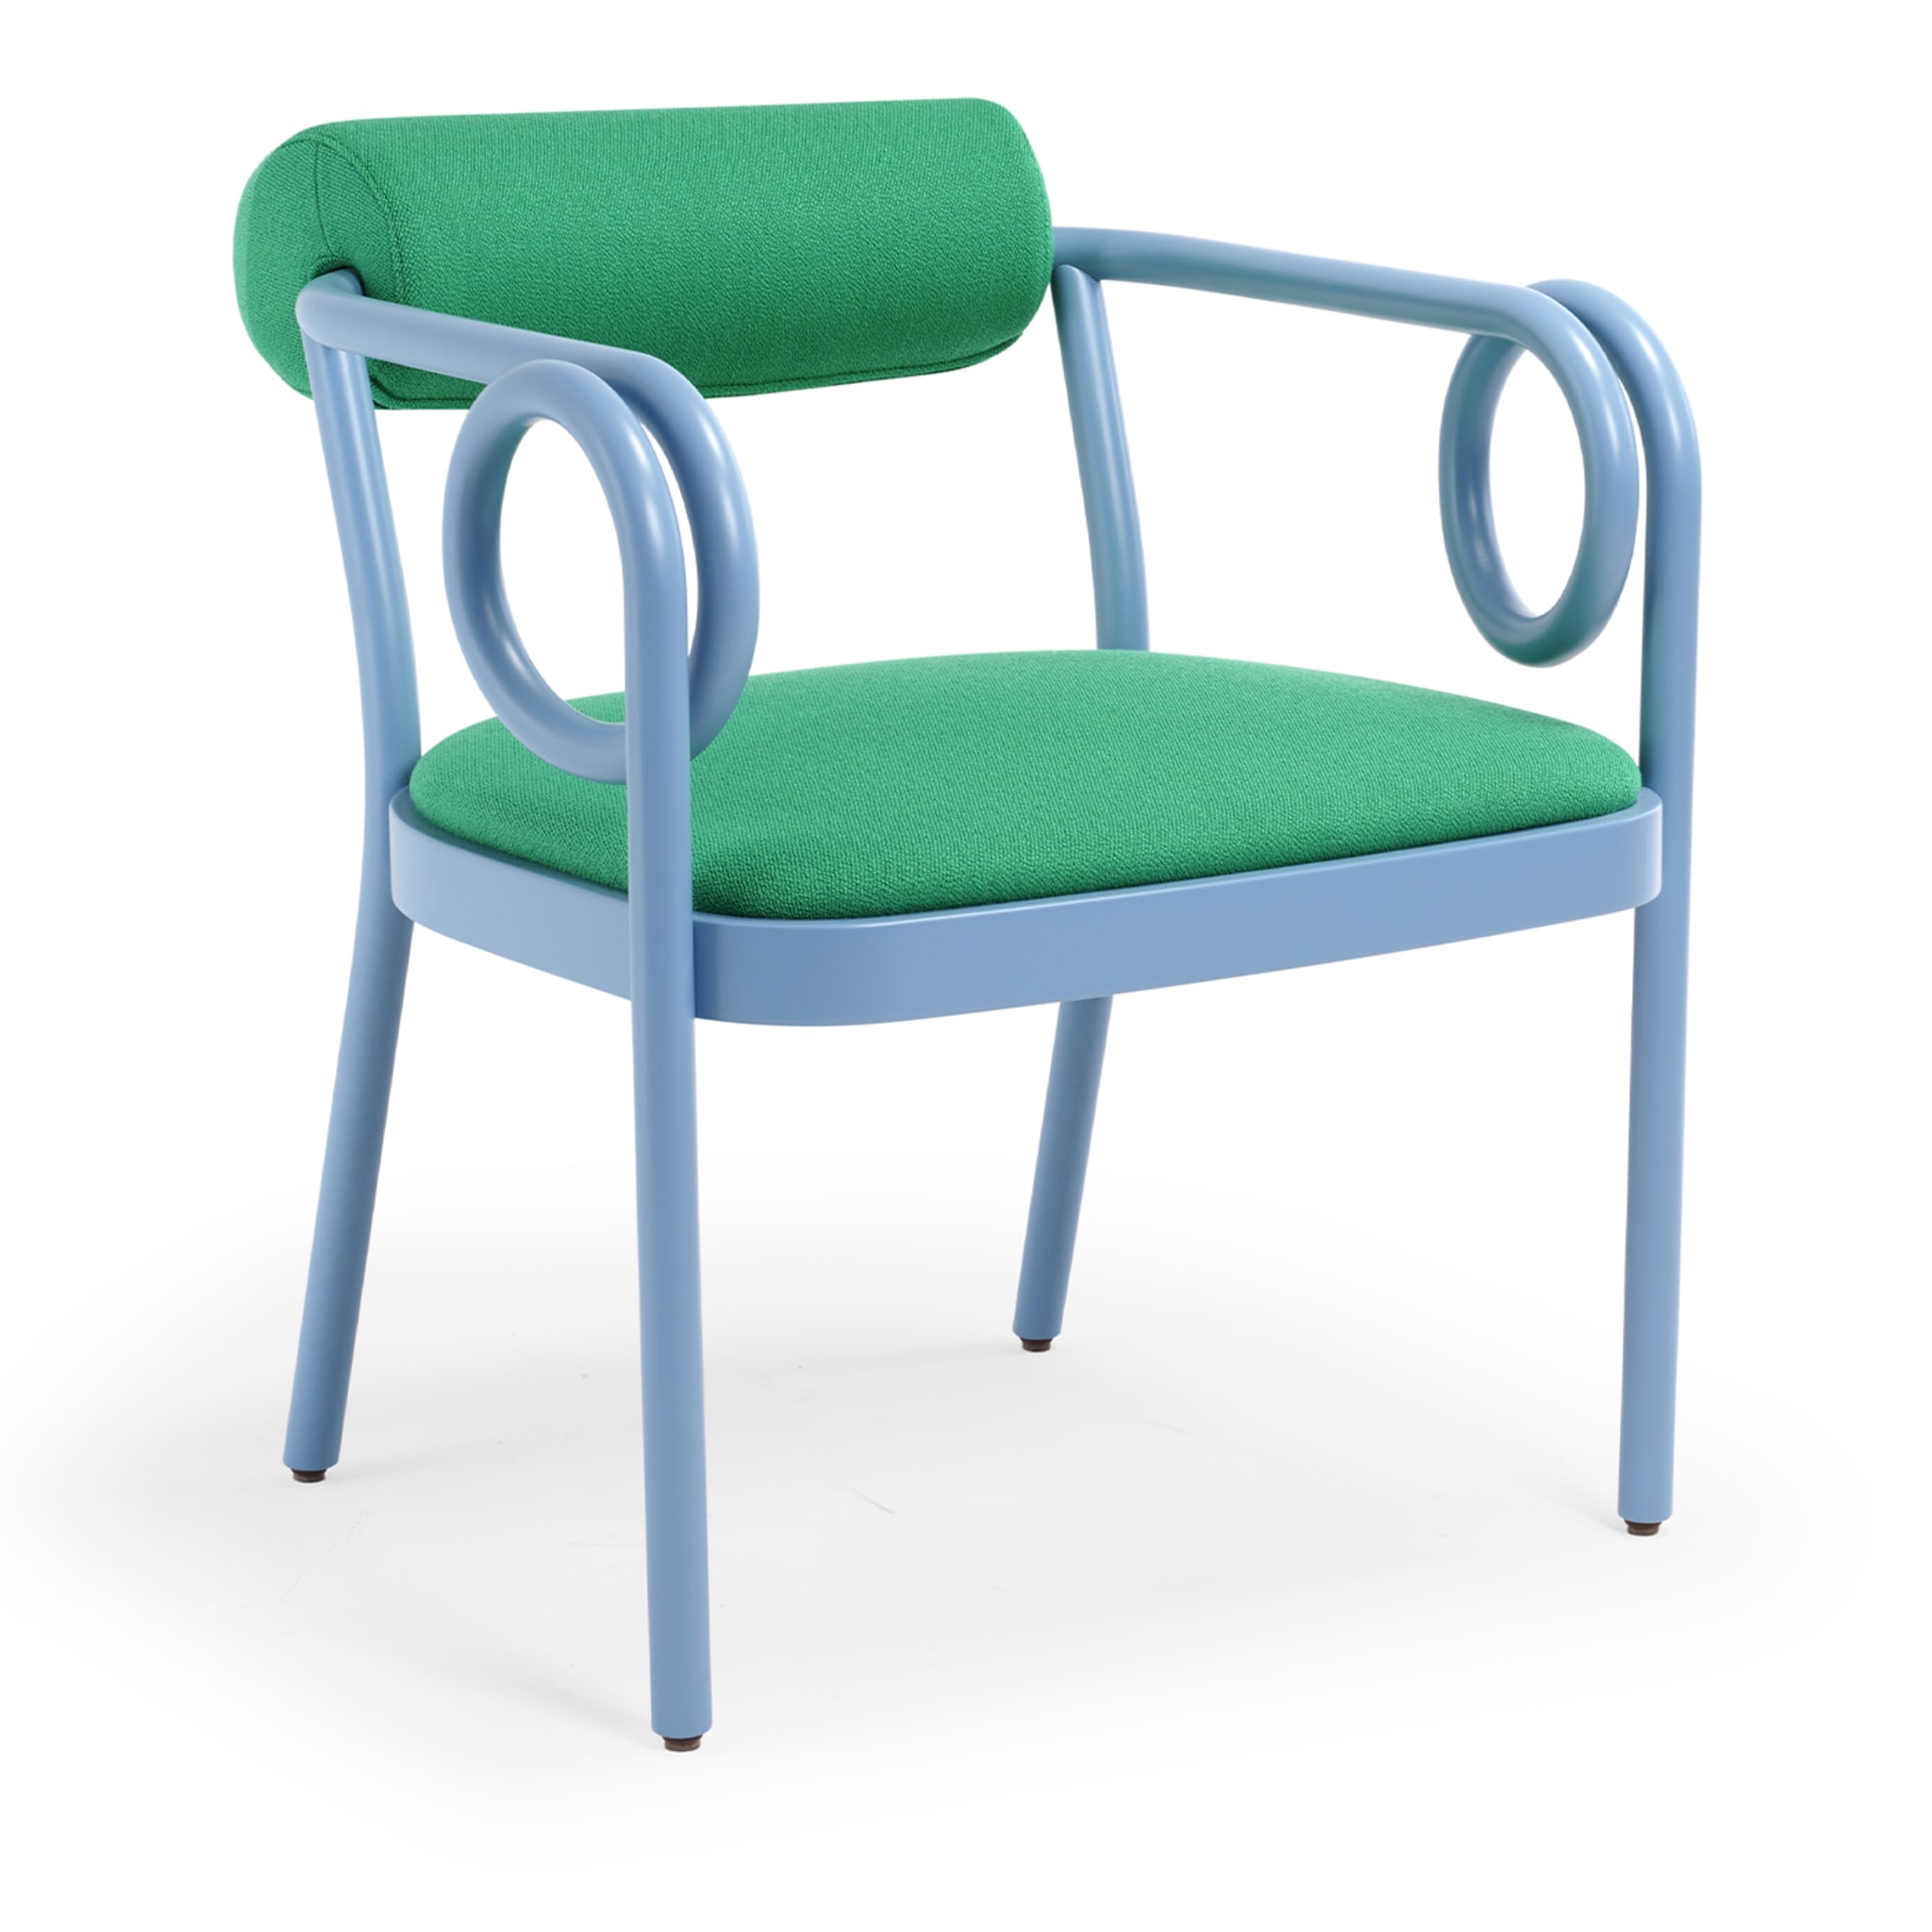 Loop Green & Light Blue Lounge Chair by India Mahdavi - Alternative view 1